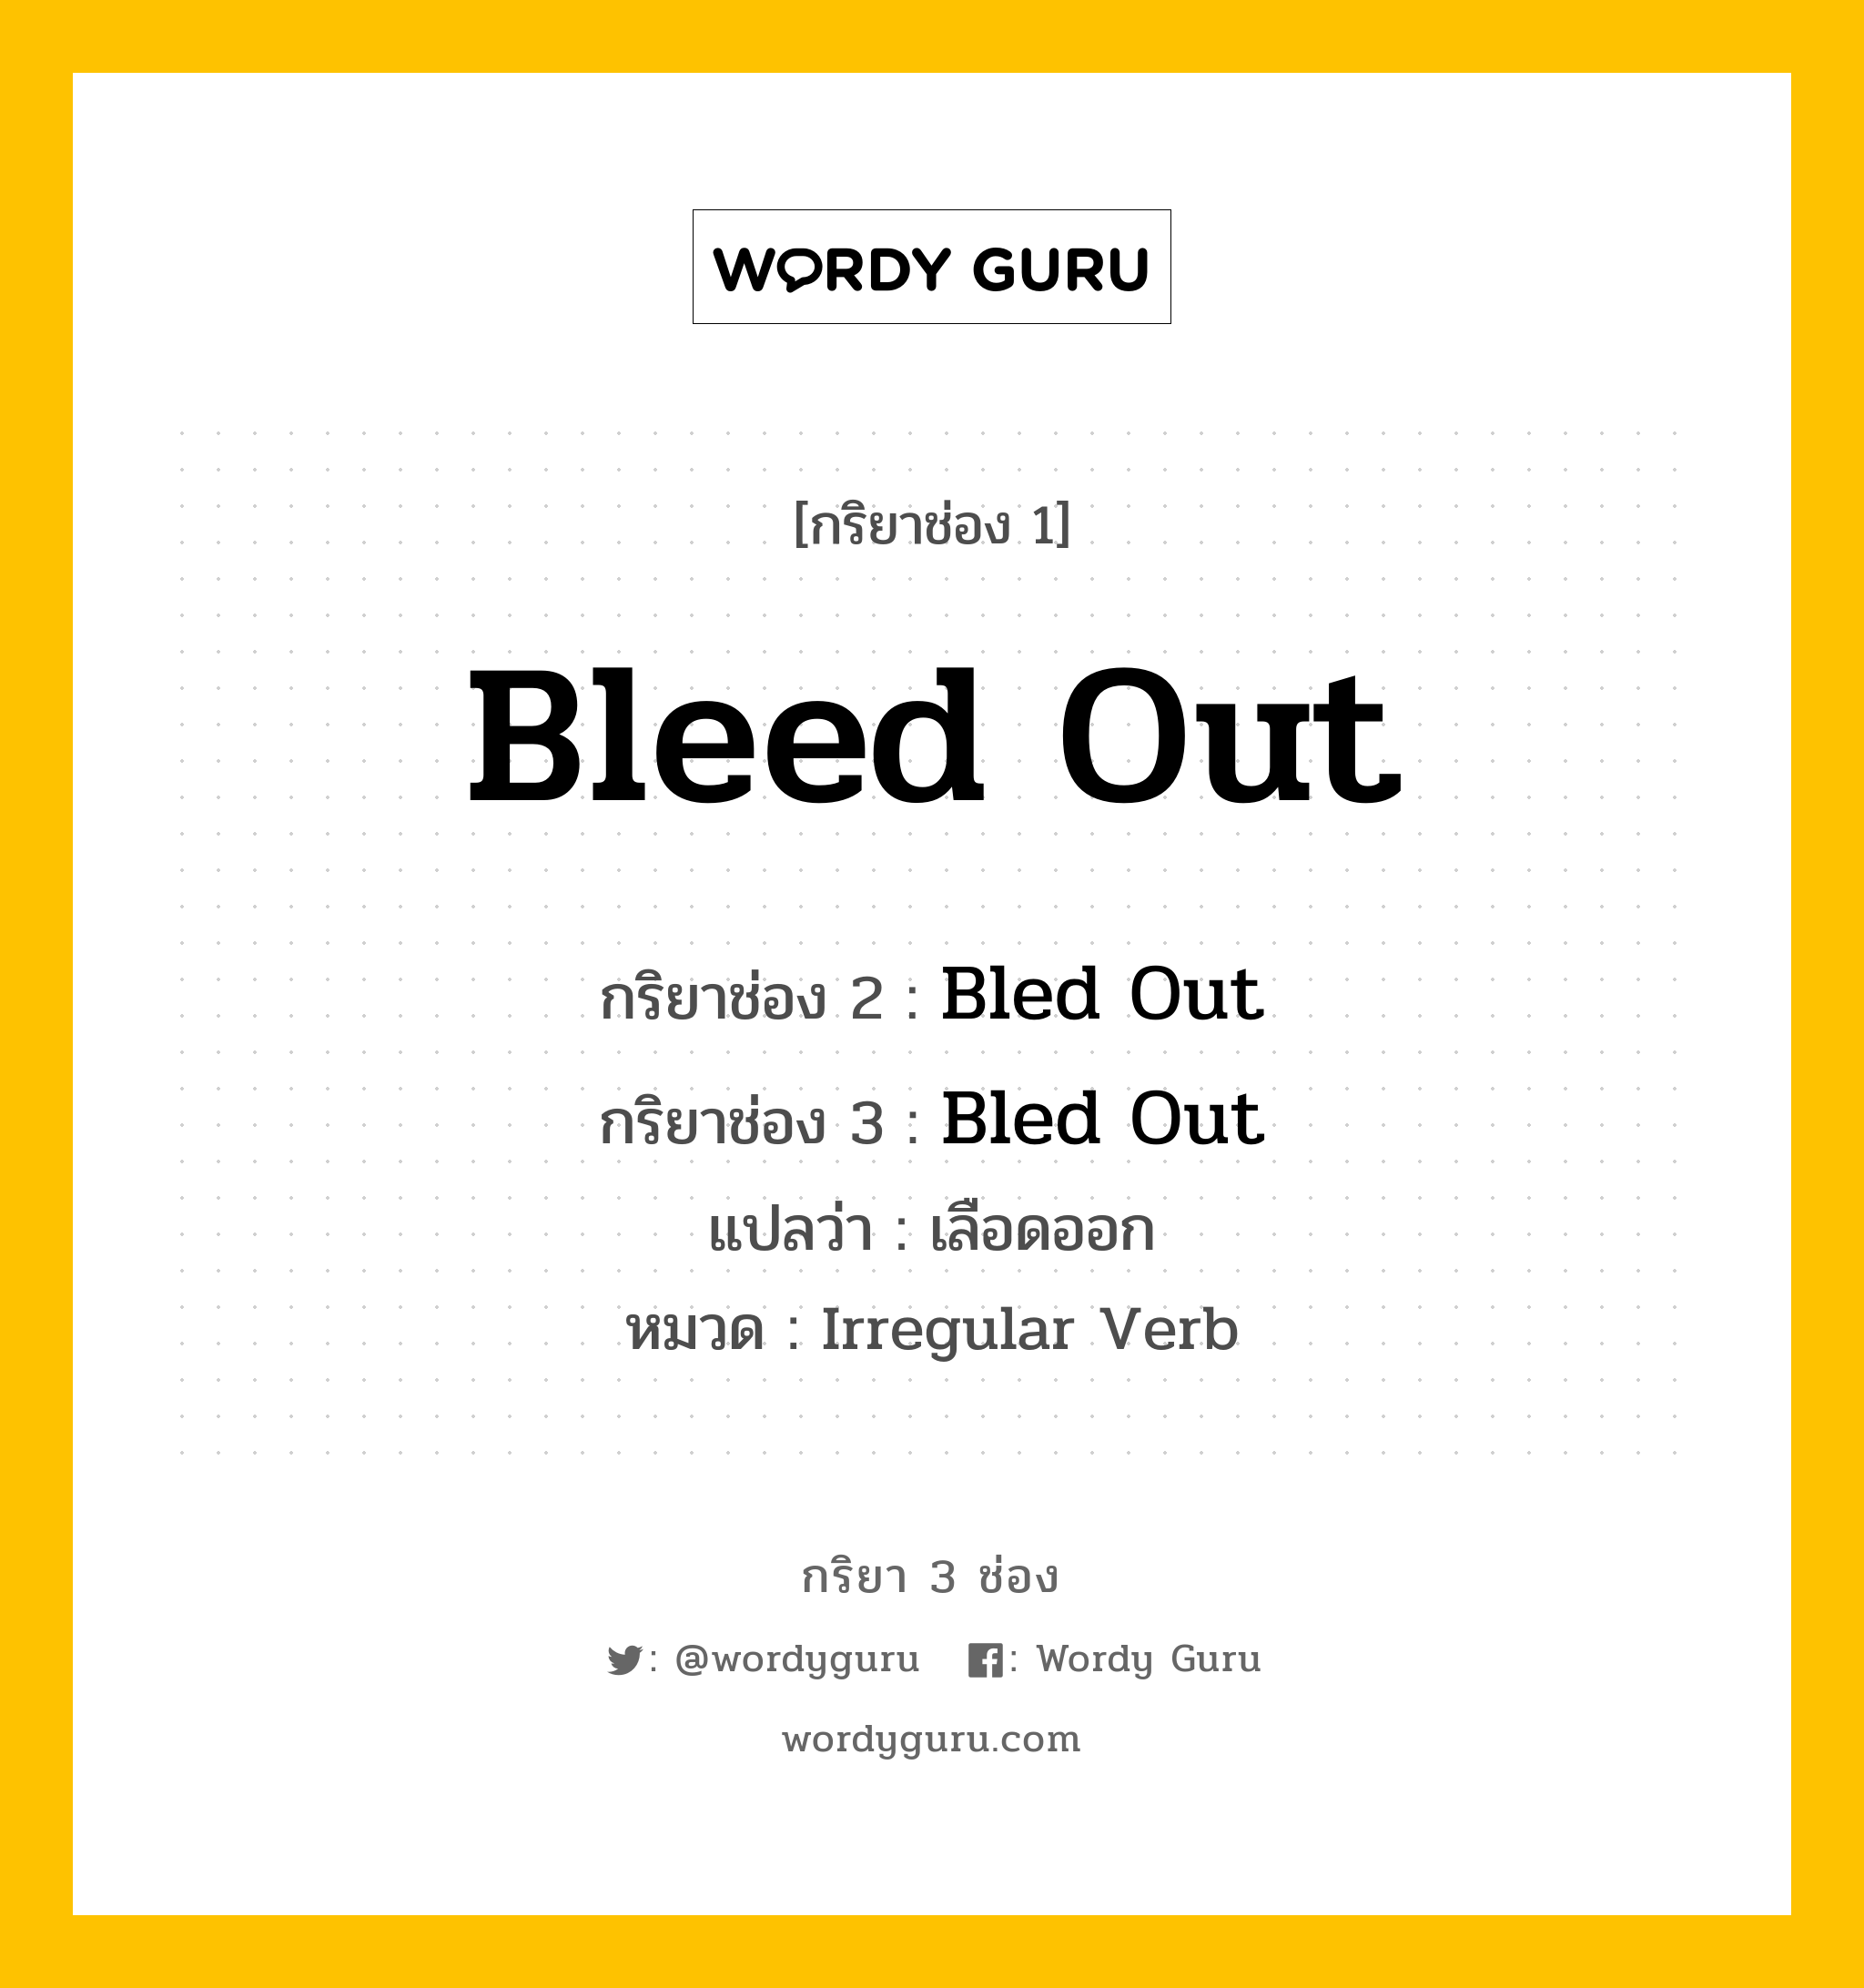 Bleed Out มีกริยา 3 ช่องอะไรบ้าง? คำศัพท์ในกลุ่มประเภท Irregular Verb, กริยาช่อง 1 Bleed Out กริยาช่อง 2 Bled Out กริยาช่อง 3 Bled Out แปลว่า เลือดออก หมวด Irregular Verb หมวด Irregular Verb